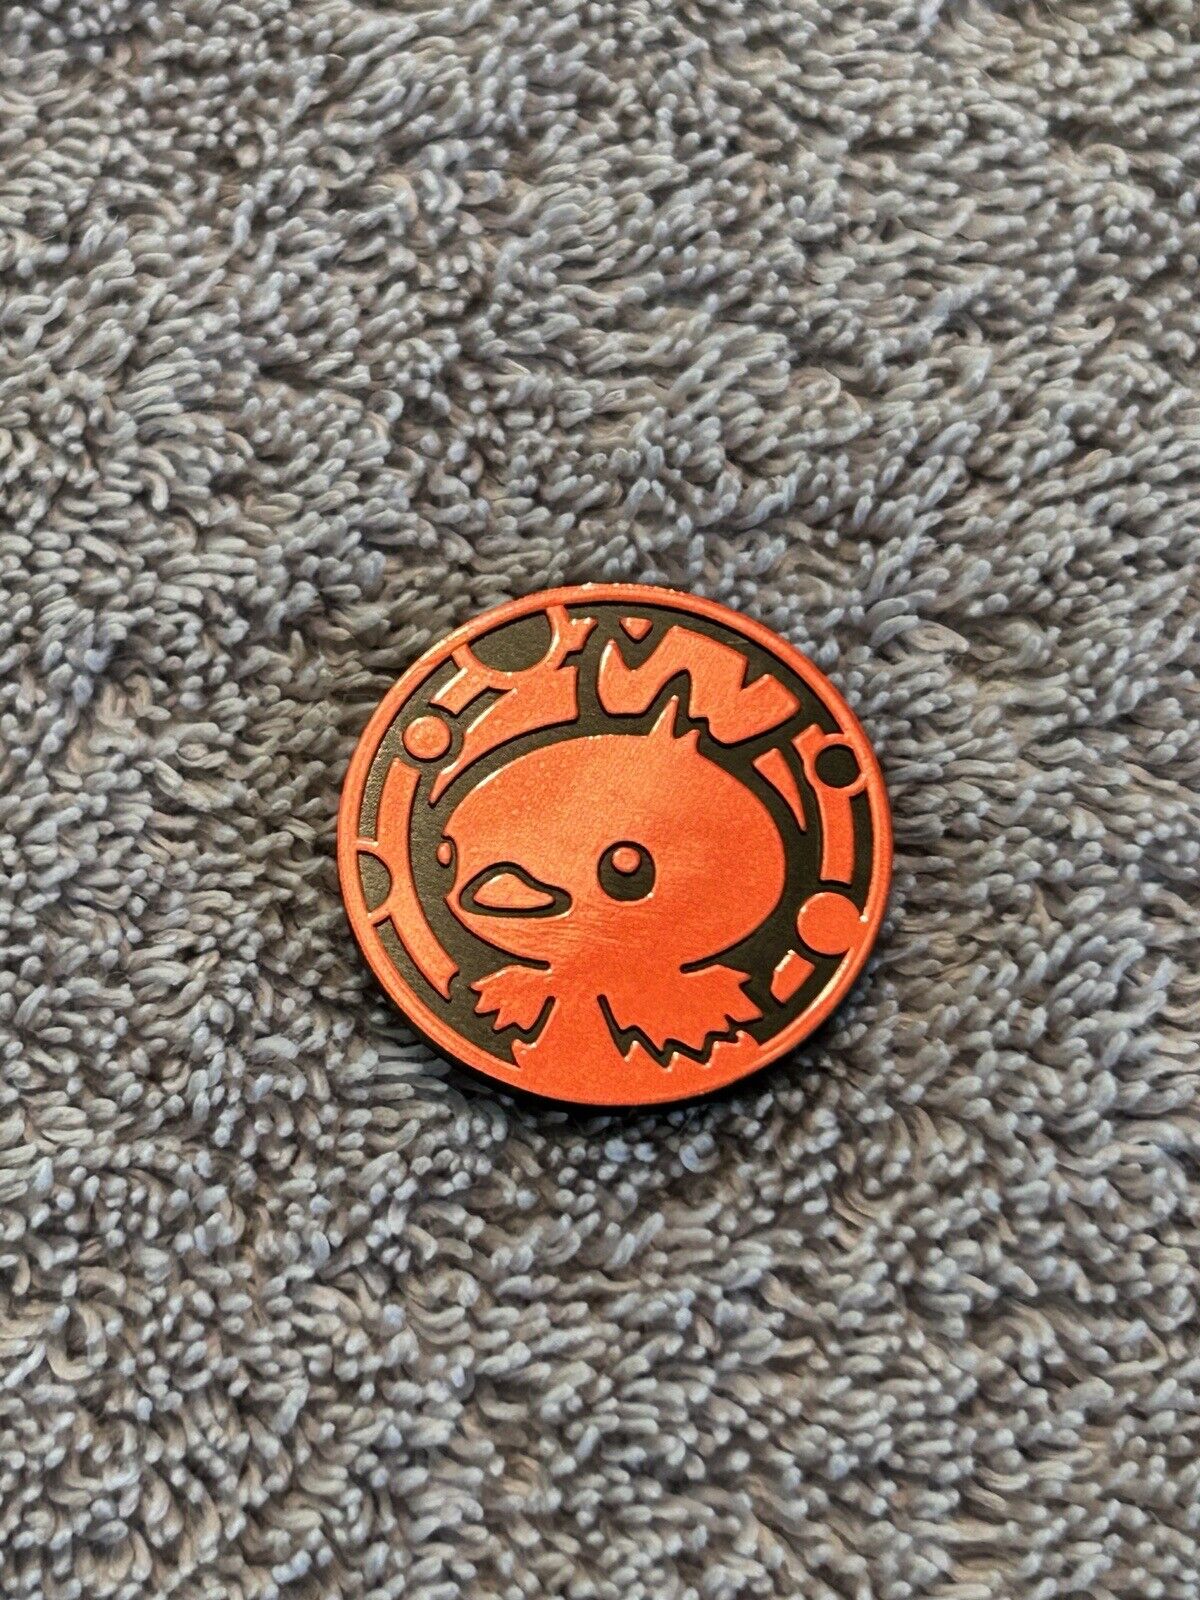 Torchic orange Coin Pokemon rare vintage foil tcg card collectible japan